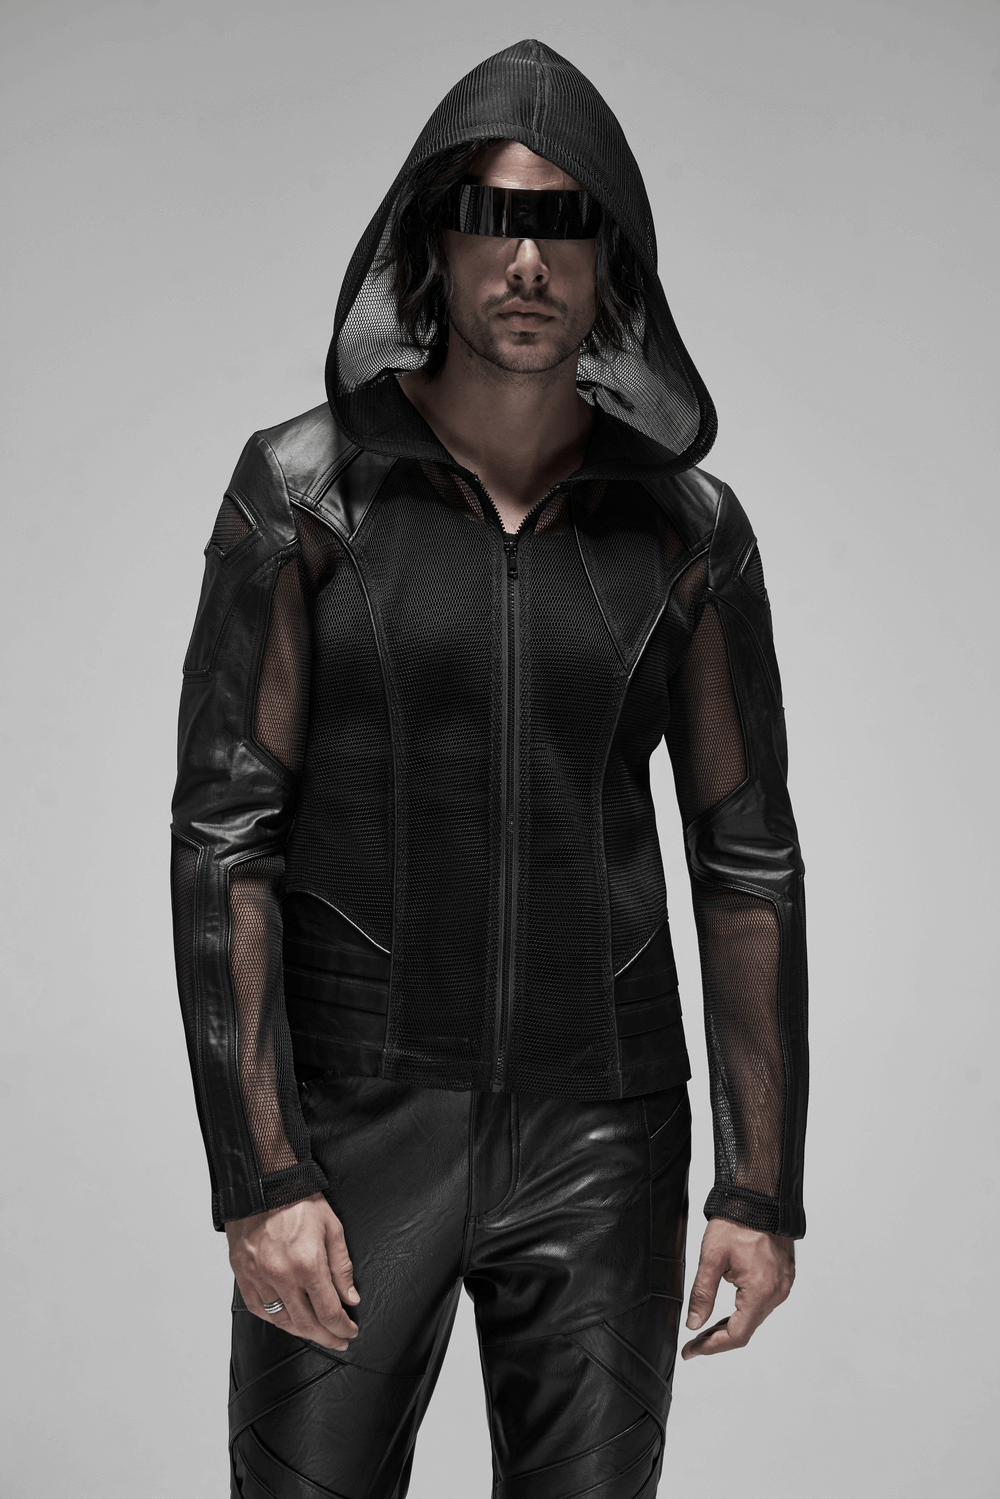 Urban Gothic Mesh Leather Zip Hoodie for Men - HARD'N'HEAVY